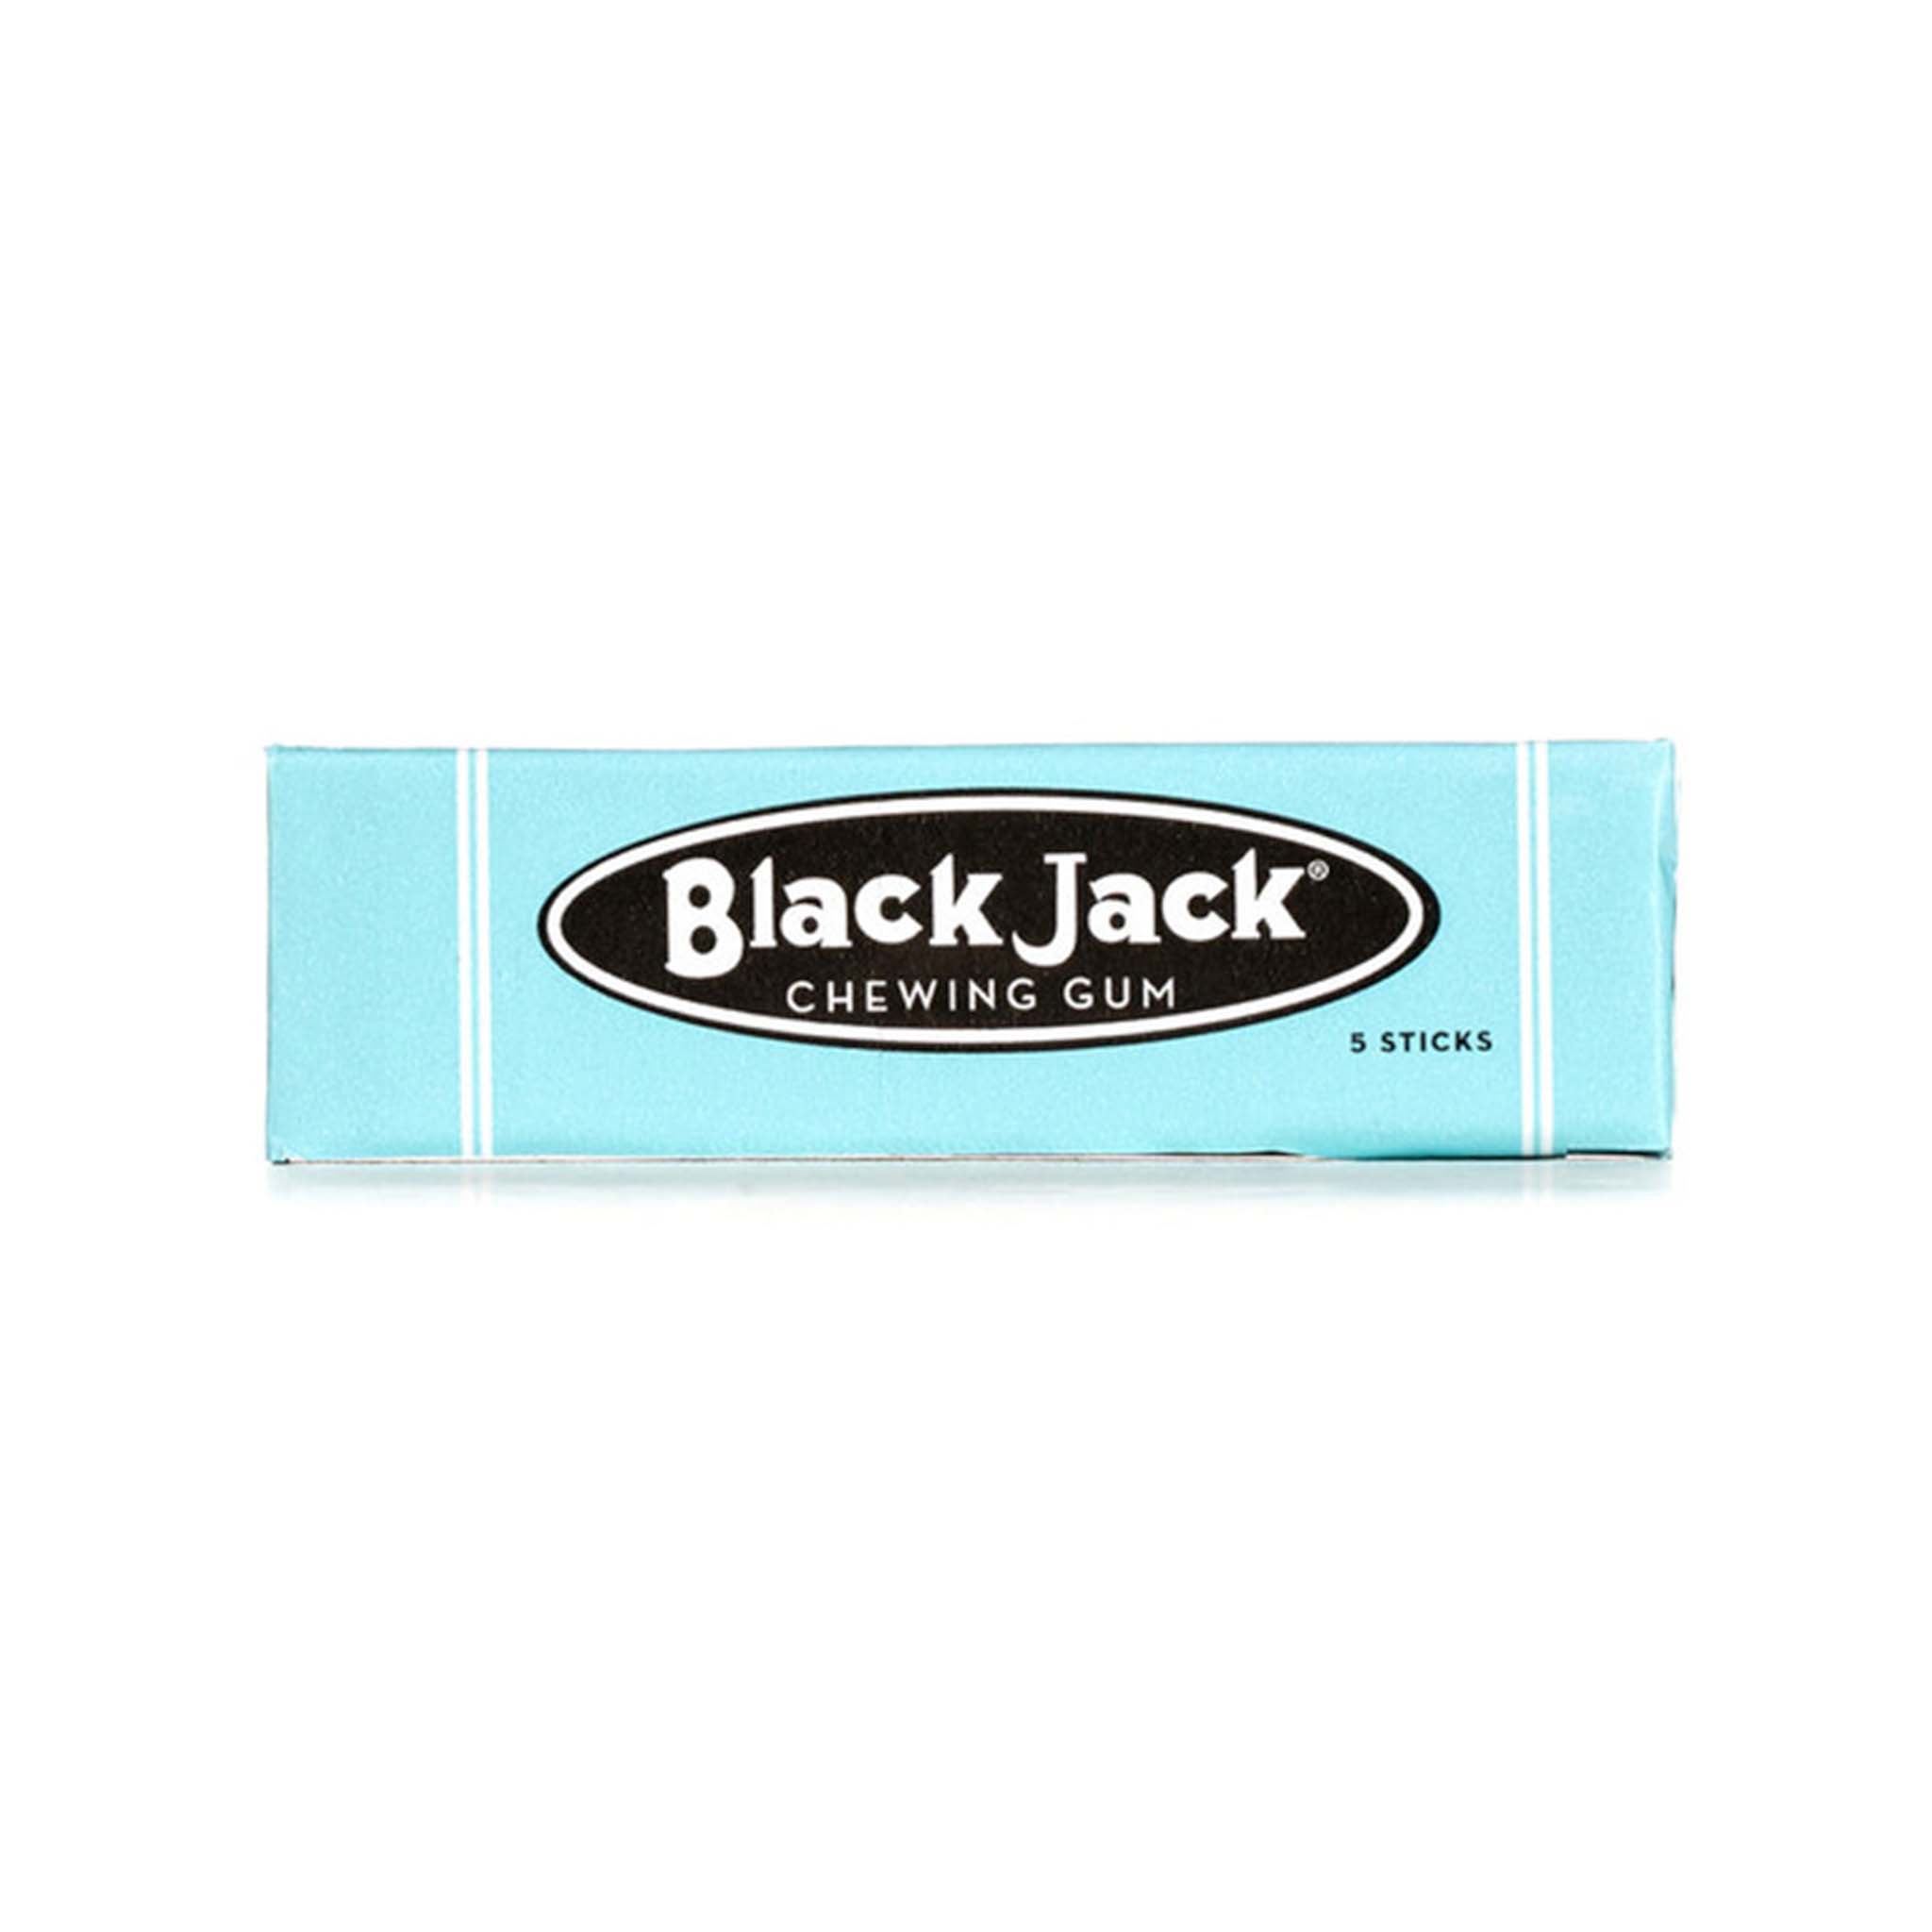 BLACK JACK GUM 5 STICKS 0.35oz